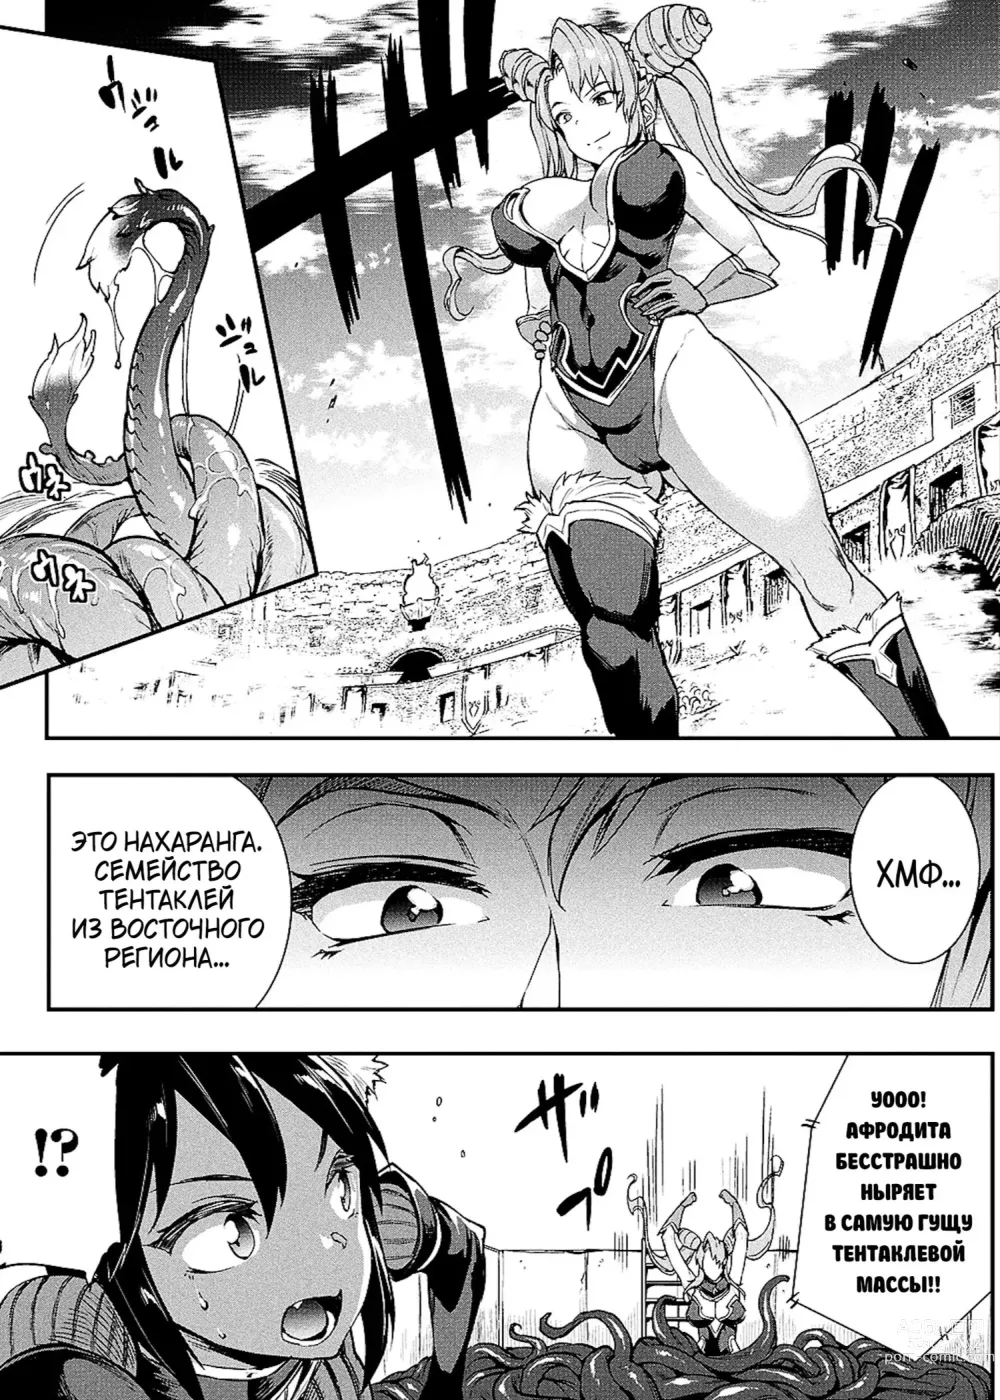 Page 27 of manga Raikou Shinki Igis Magia II -PANDRA saga 3rd ignition-